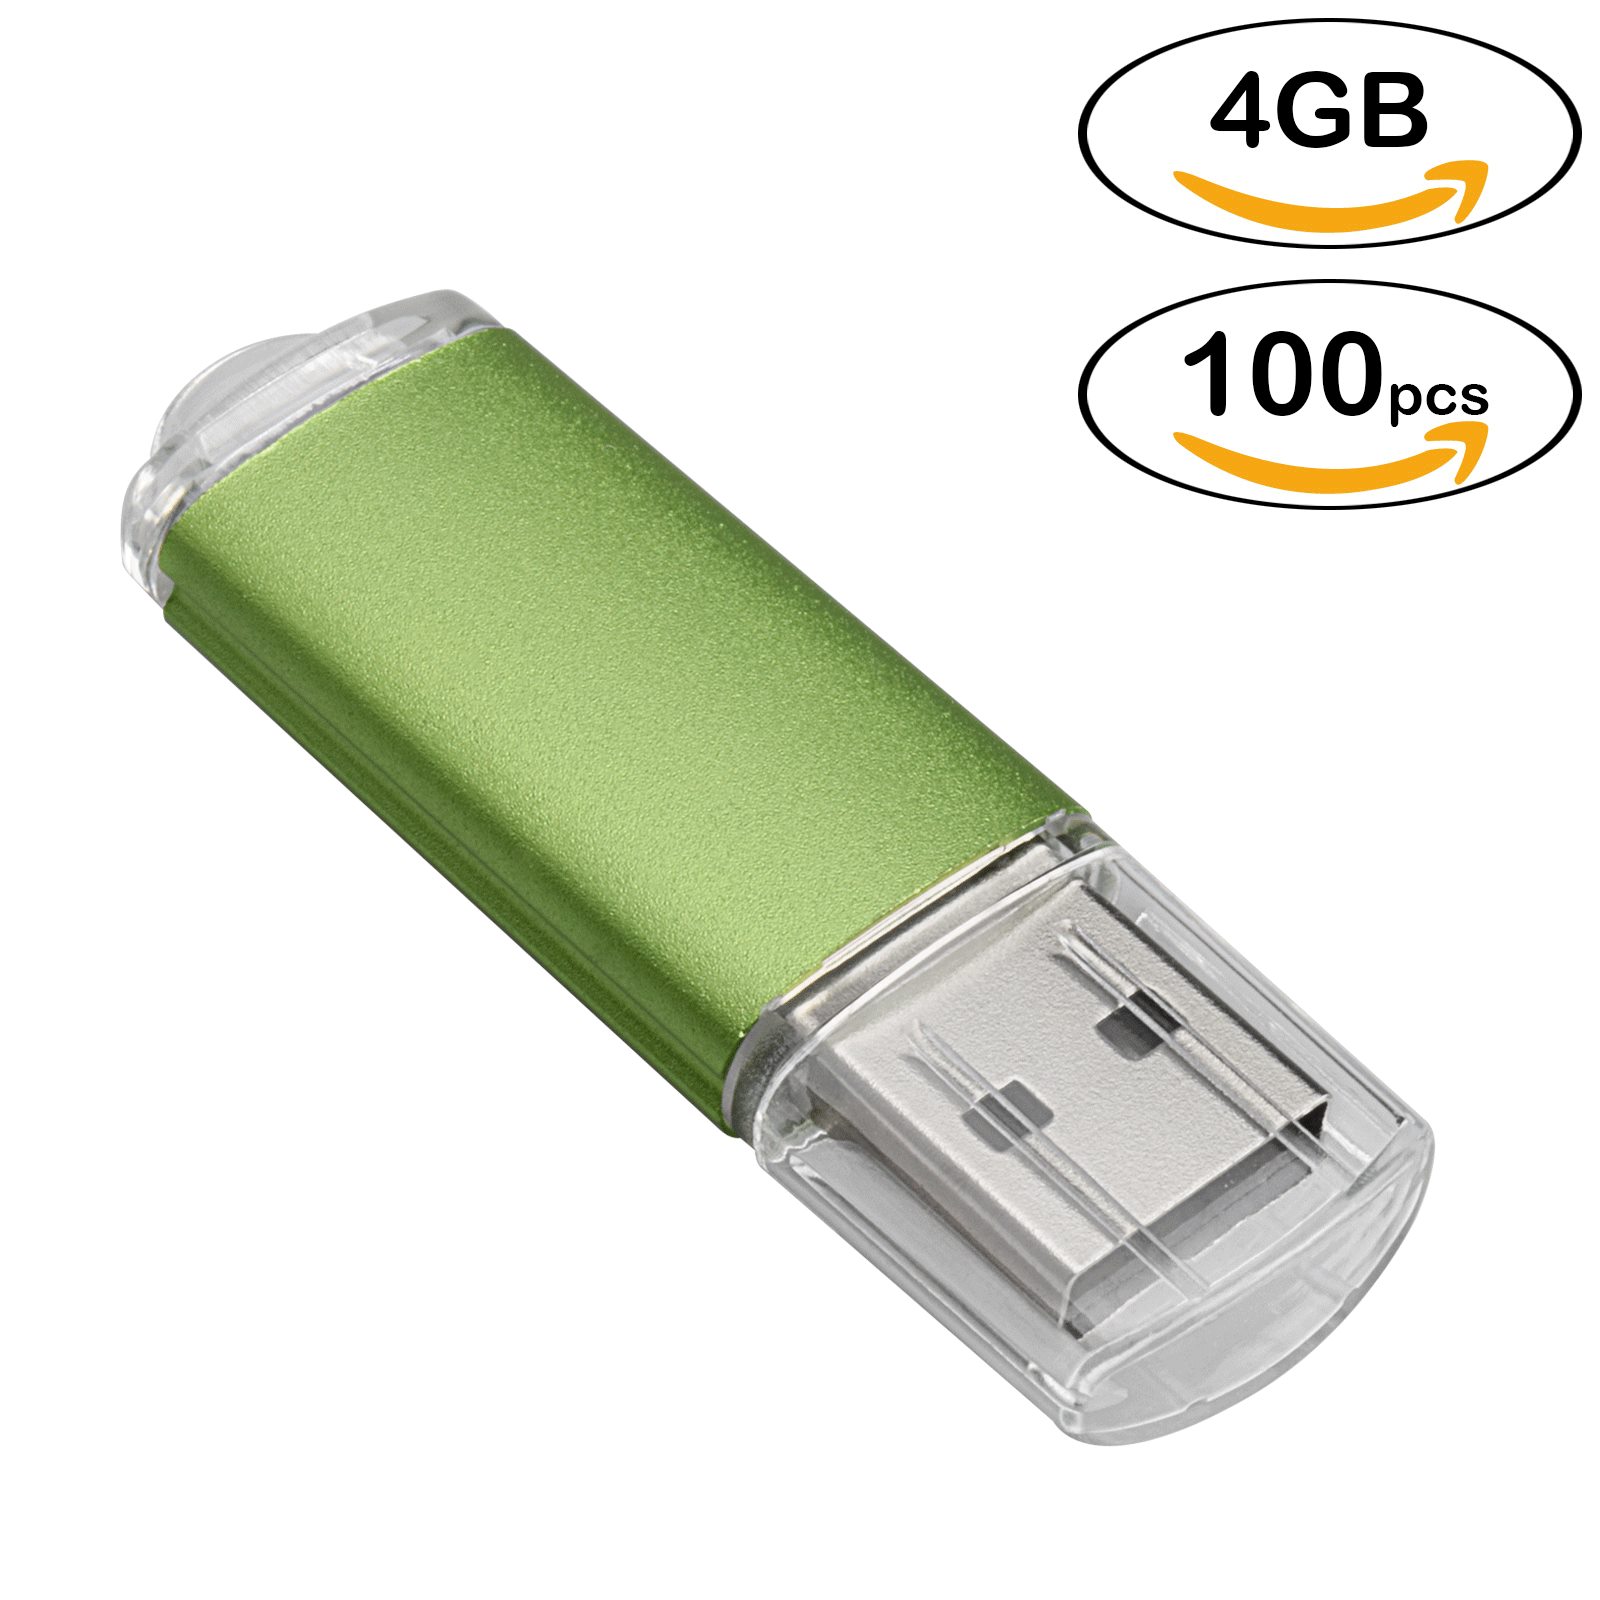 

Wholesale 100pcs Rectangle USB Flash Drives 4GB Flash Pen Drive High Speed 4gb Thumb Memory Stick Storage for PC Laptop Tablet Multicolors